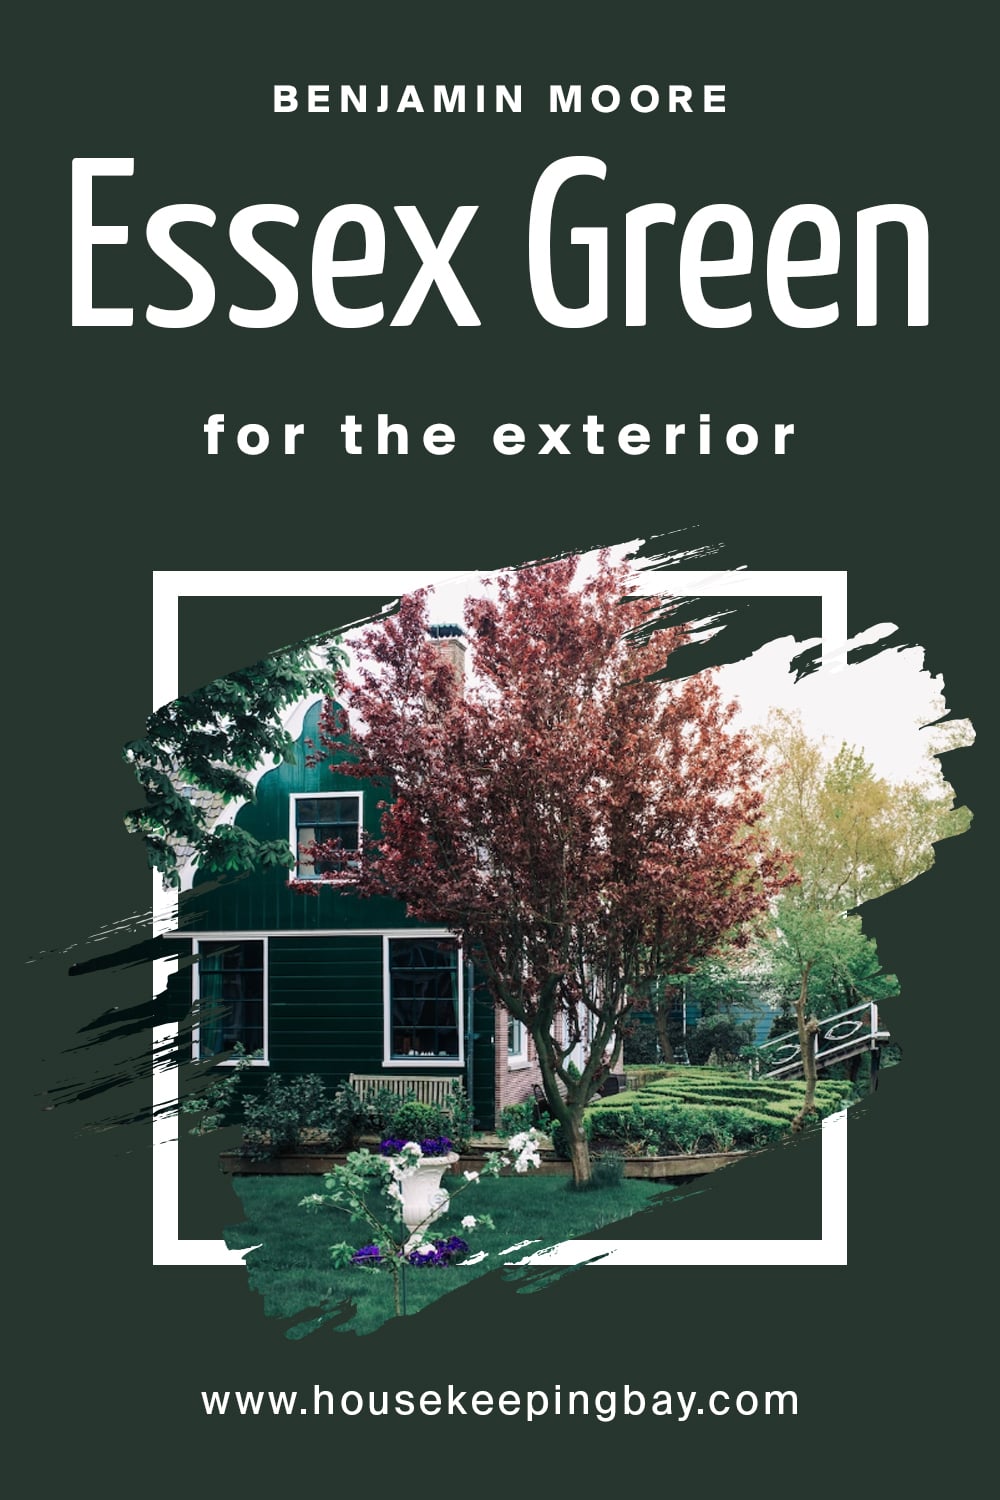 Benjamin Moore. Essex Green for the exterior